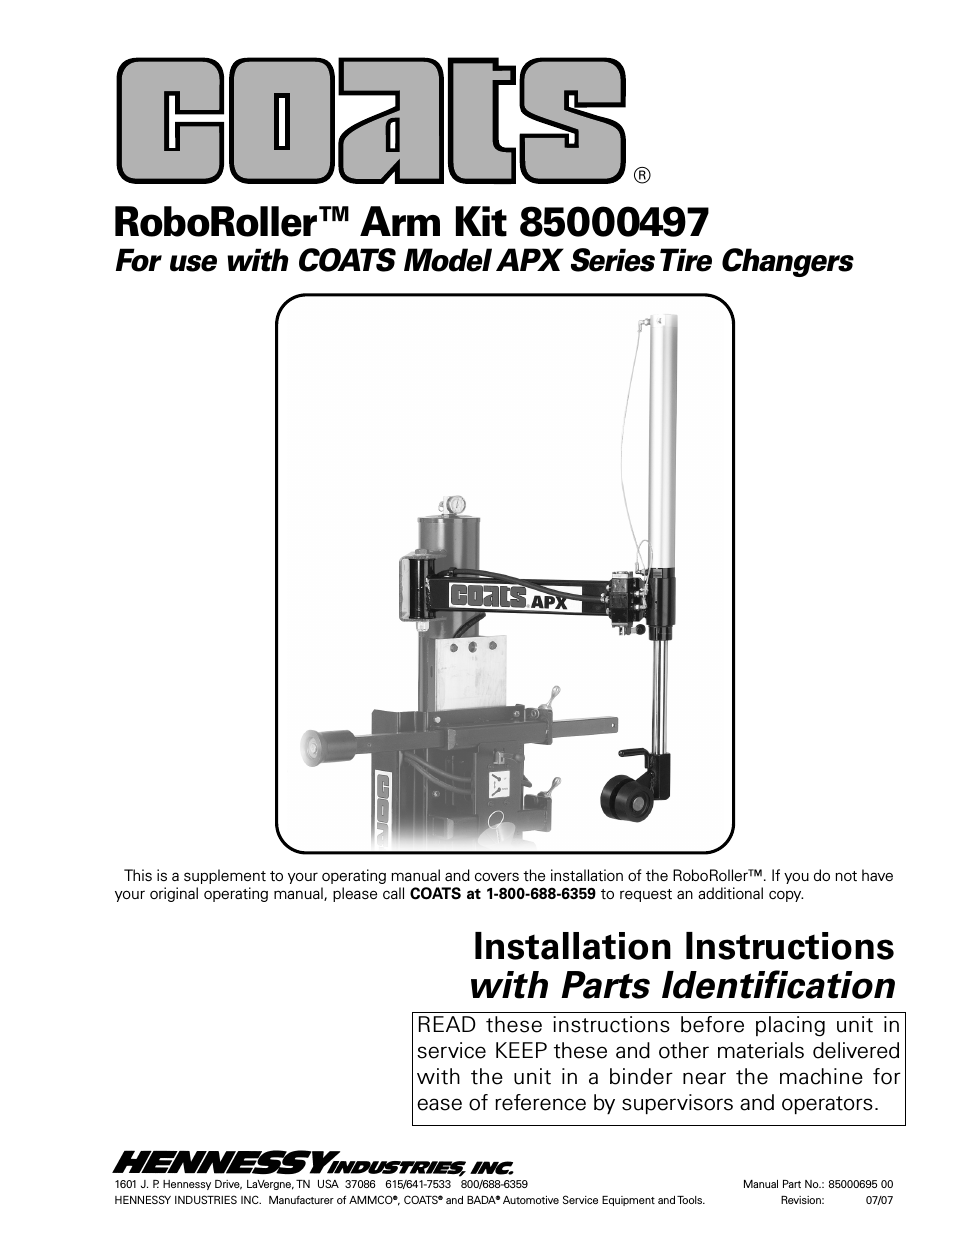 Kit 85000497, RoboRoller Arm